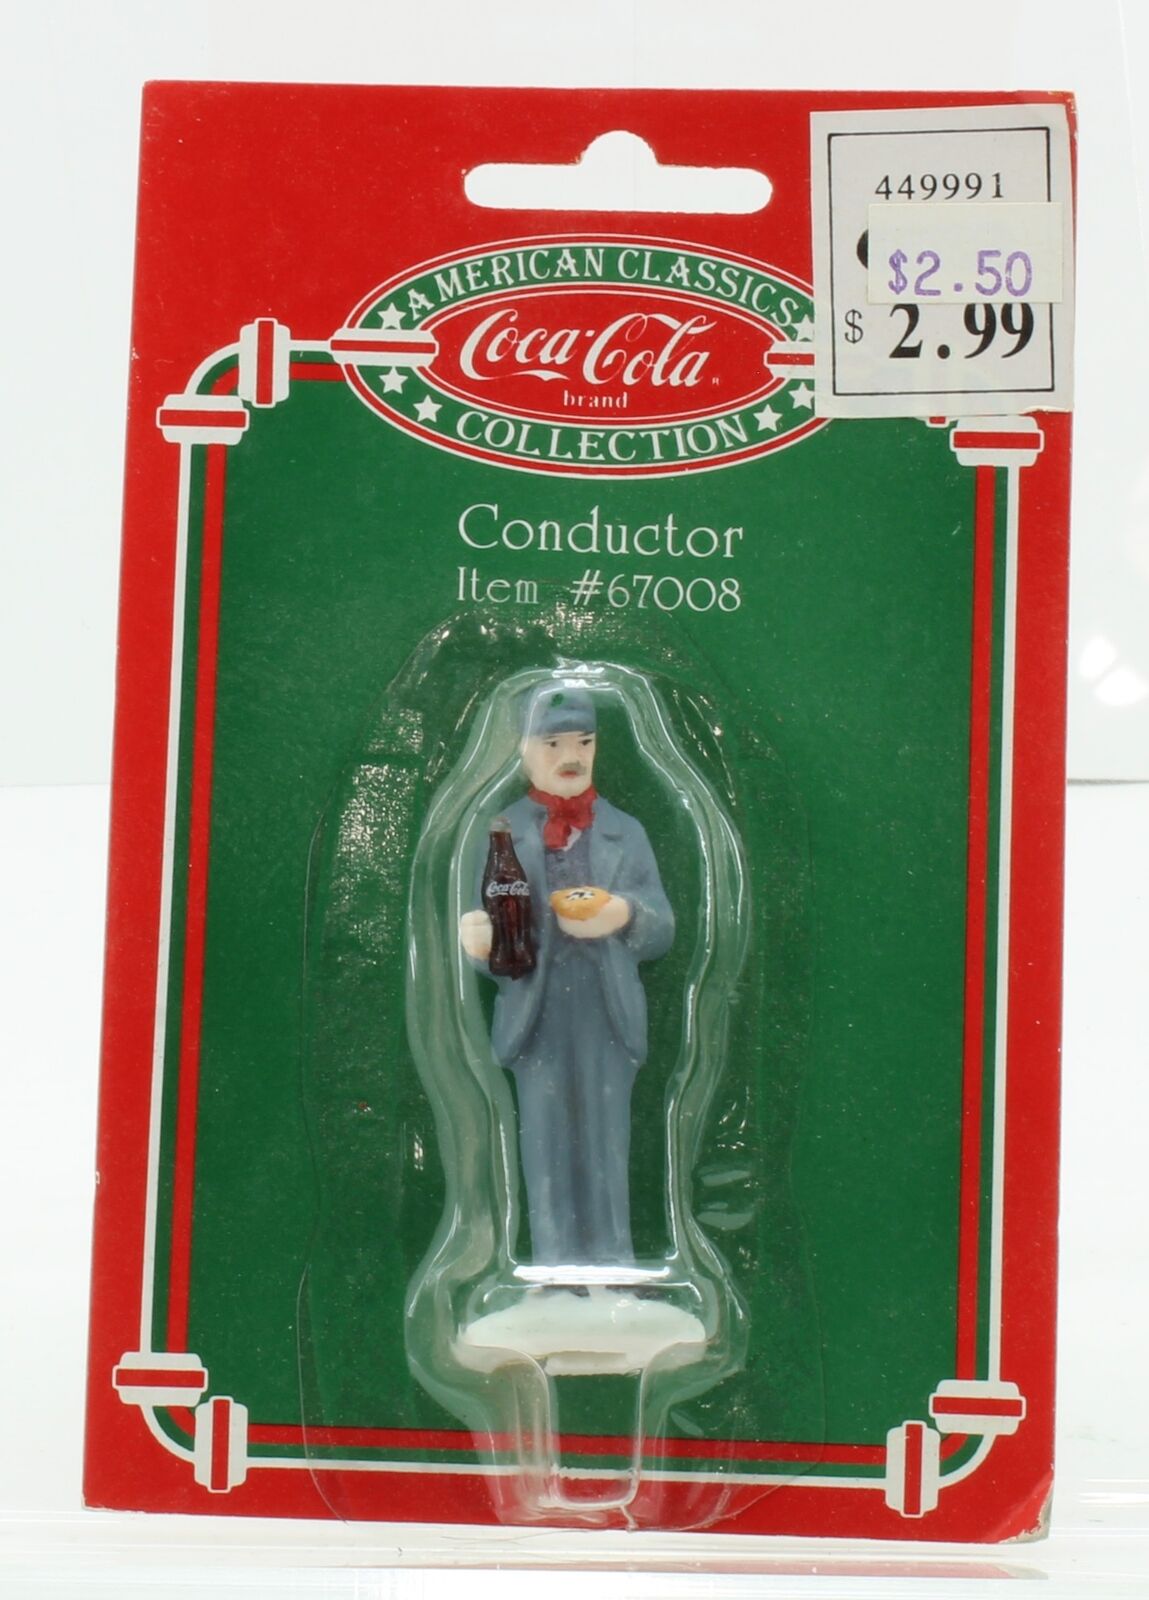 Coca-Cola - American Classics Collection Conductor #67008 Christmas Figure -1995